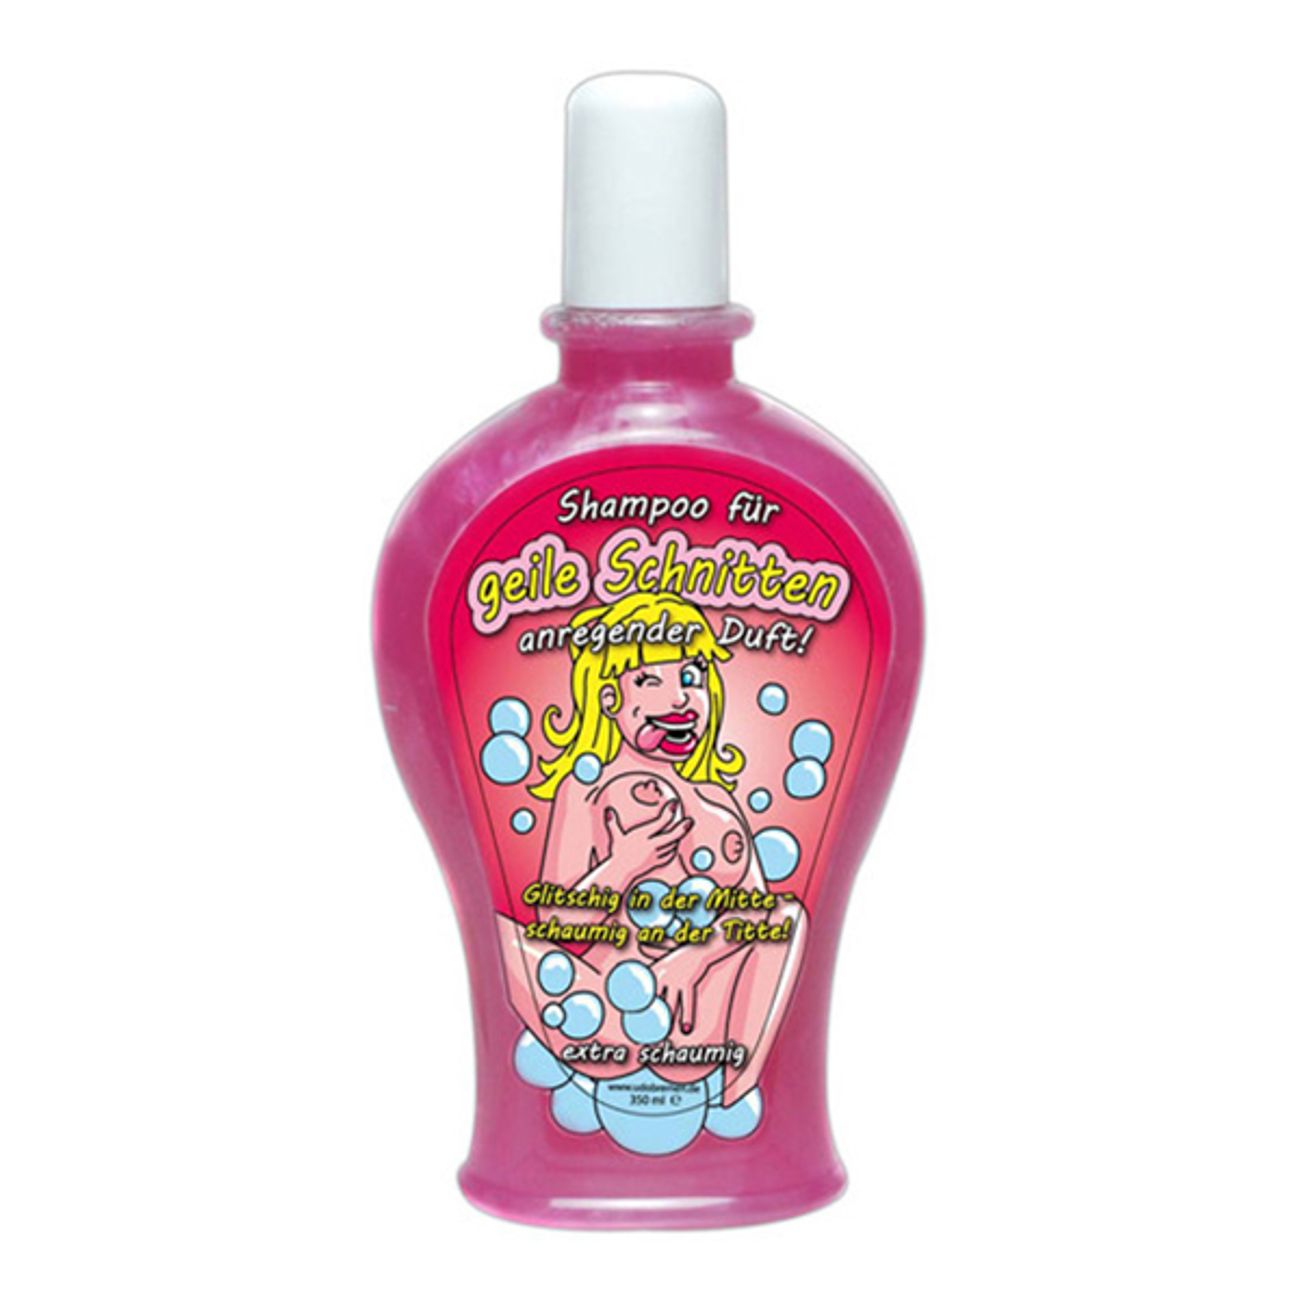 shampoo-for-horny-women-1